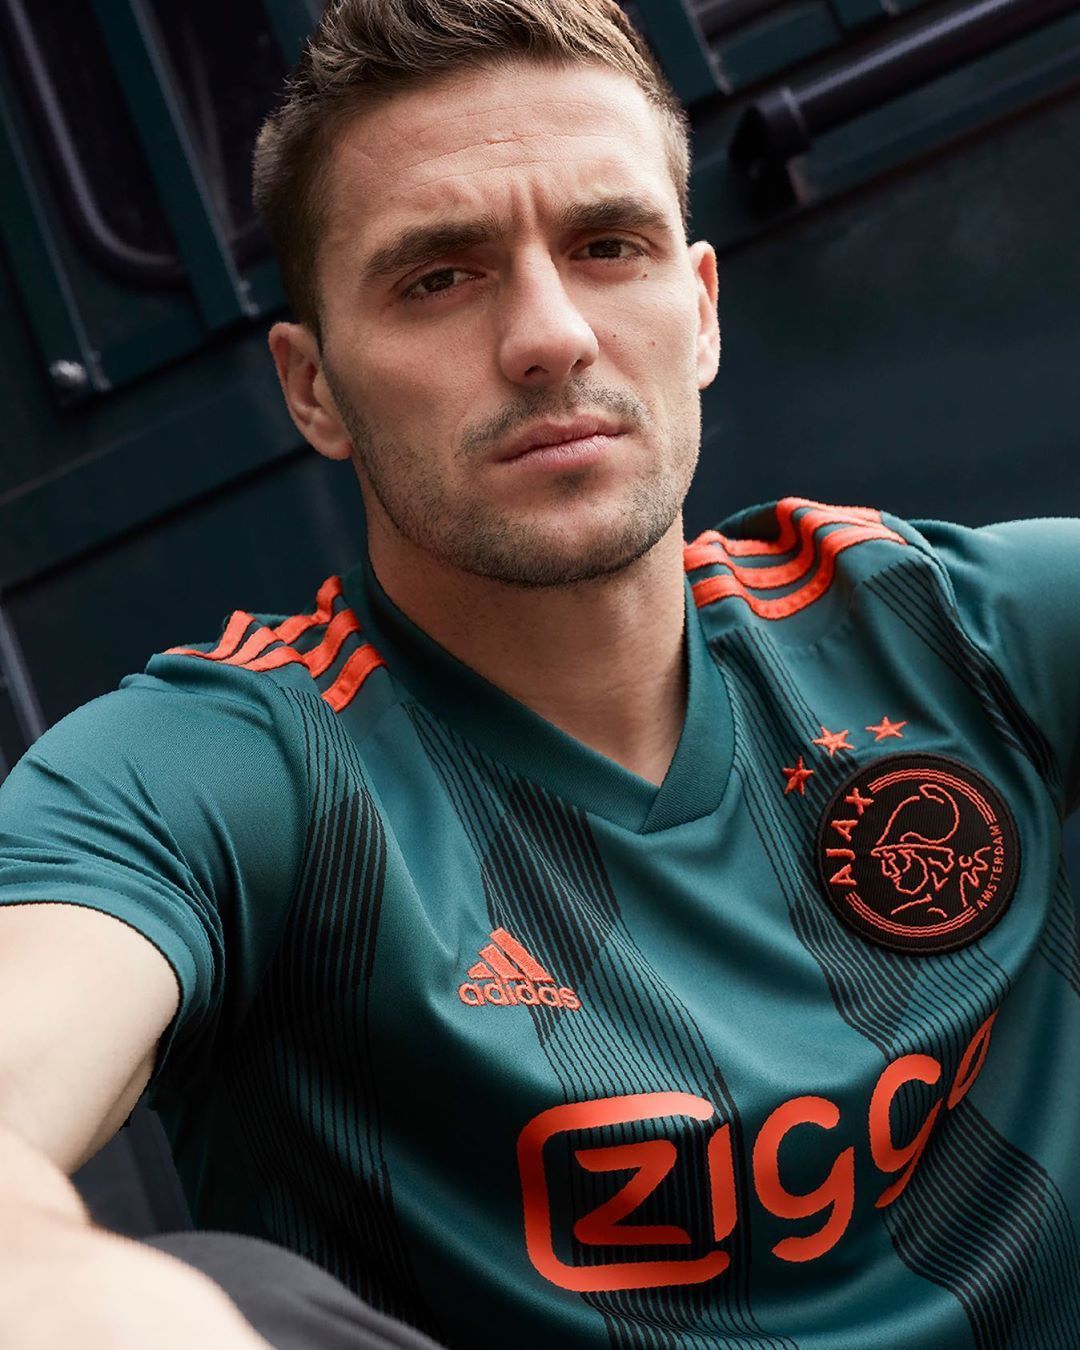 50.4K 次赞、 485 条评论šan Tadić 在 Instagram 发布：“The New Ajax Away Jersey 19 20 ❌❌❌ You Like It?